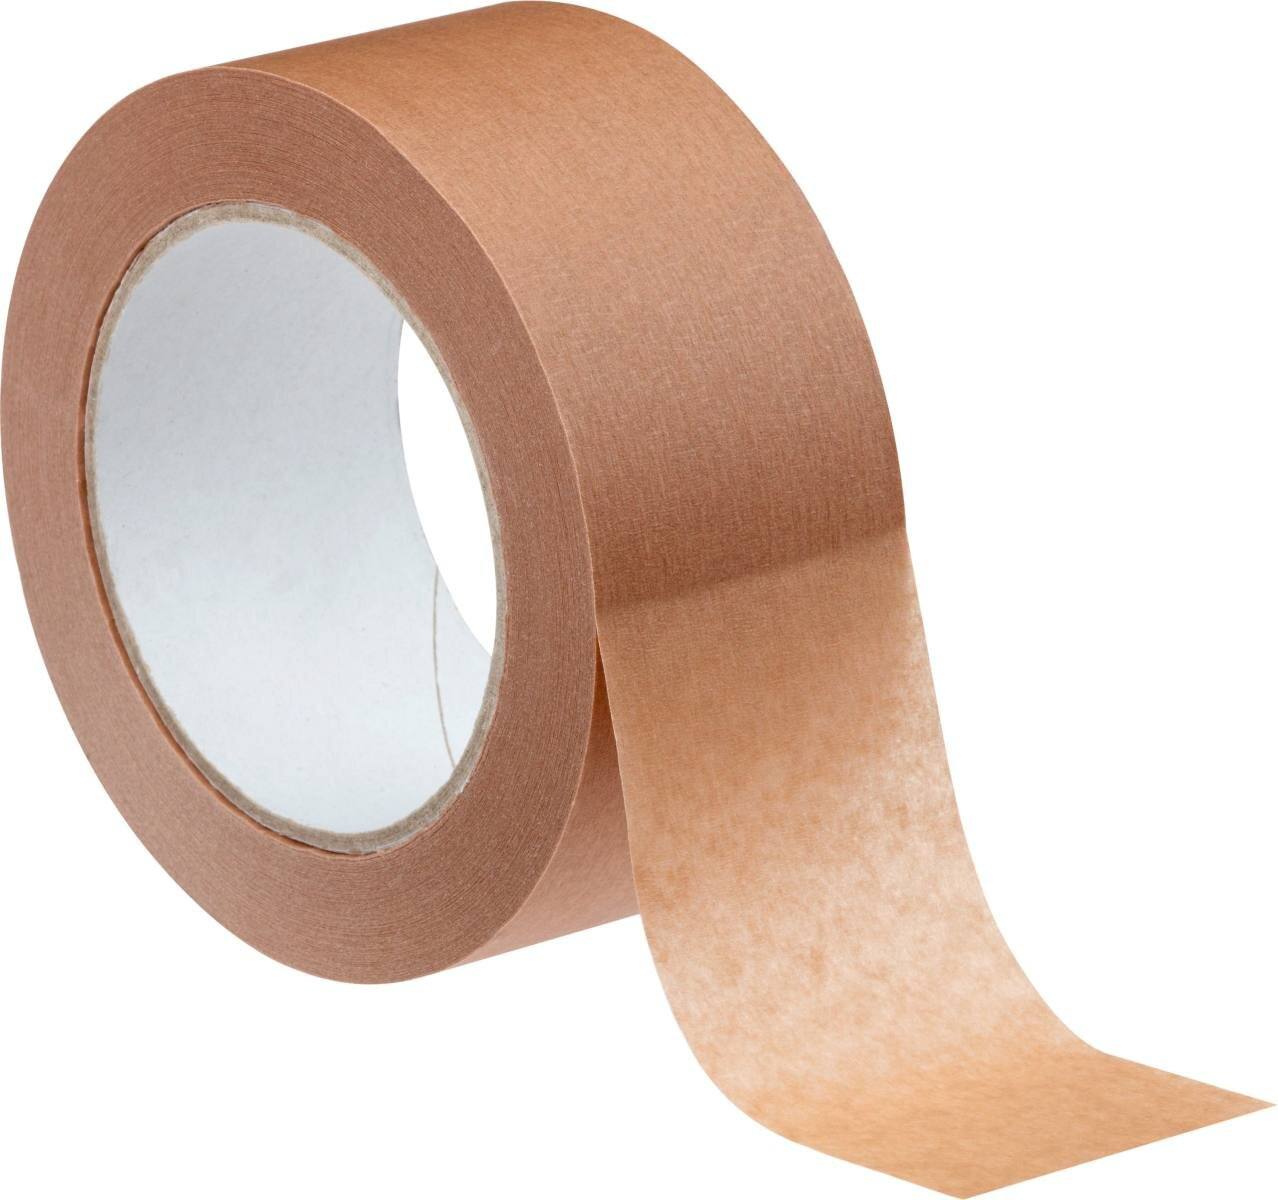 3M Scotch packaging tape 3444, brown, 50 mm x 50 m, 0.11 mm